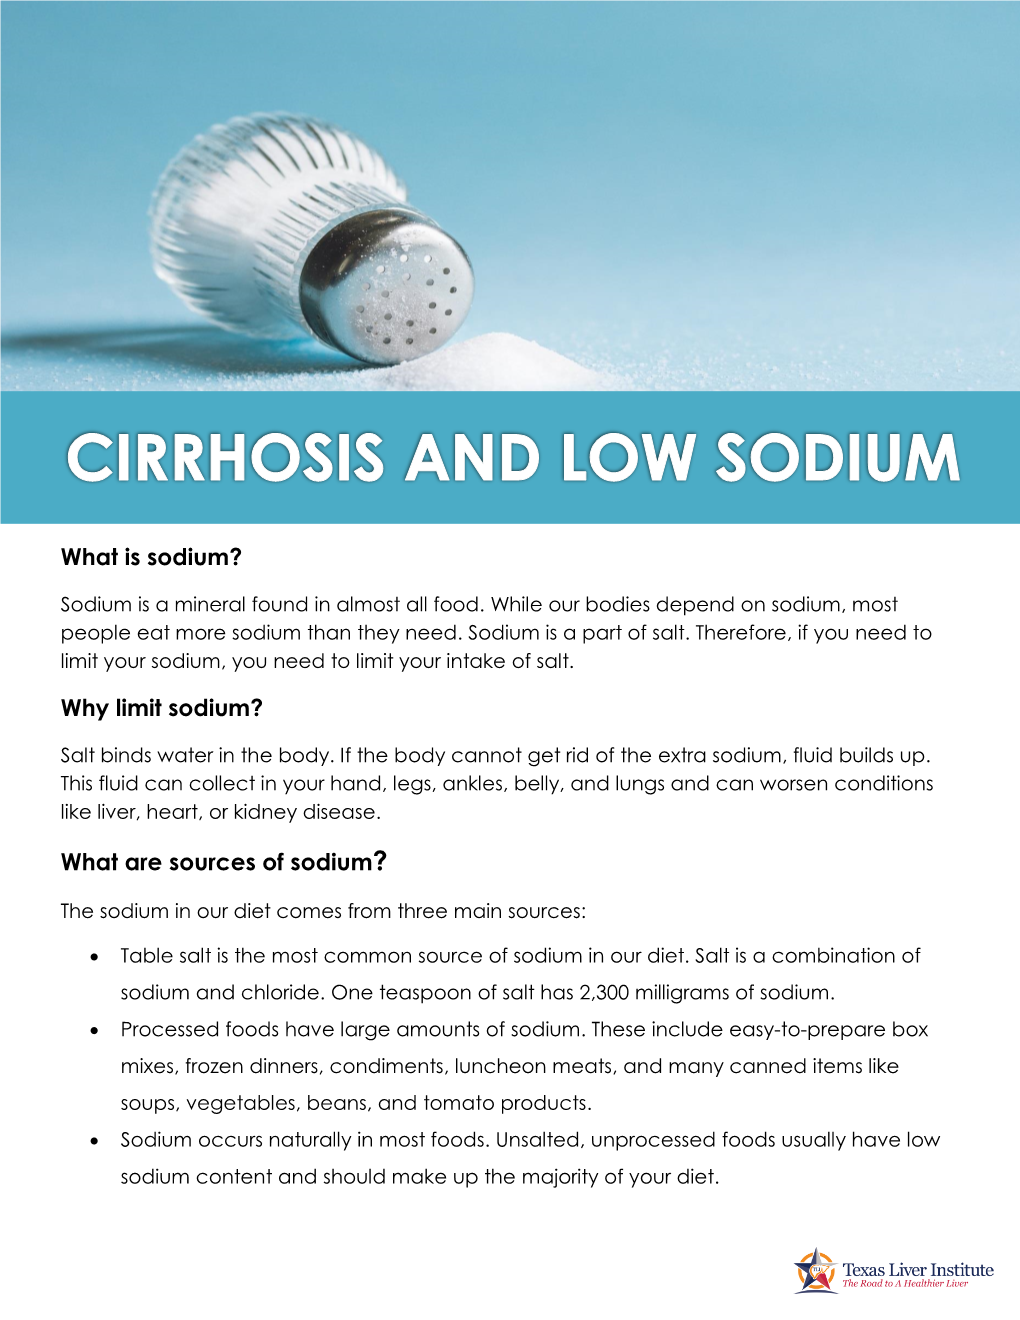 Cirrhosis and Low Sodium